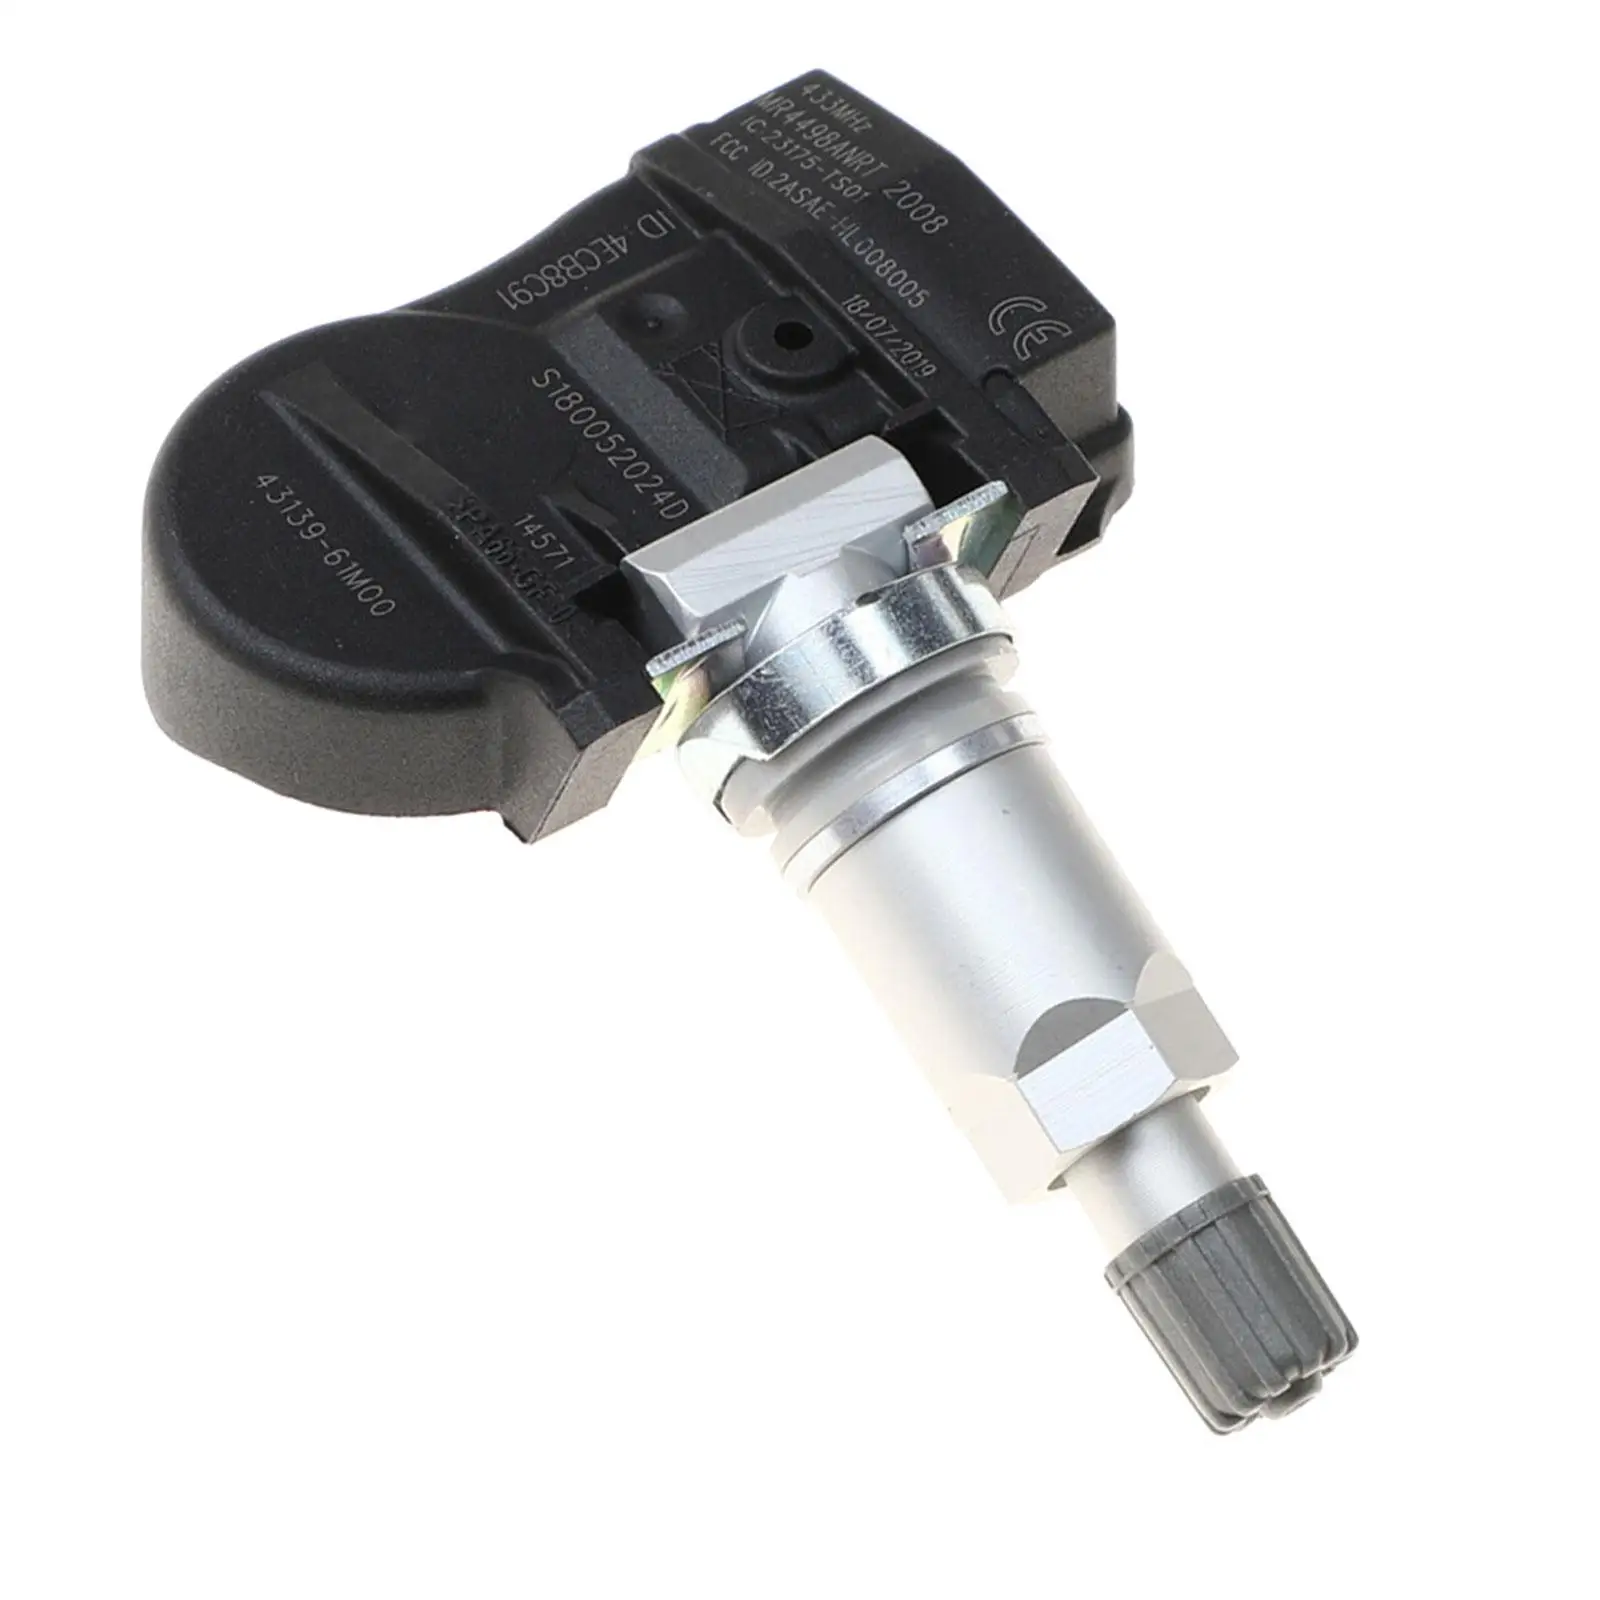 Tire Pressure Monitor Sensor Spare Parts for Suzuki Vitara SX4 S-cross Jimmy Sport Ignis Baleno Swift Long Service Life